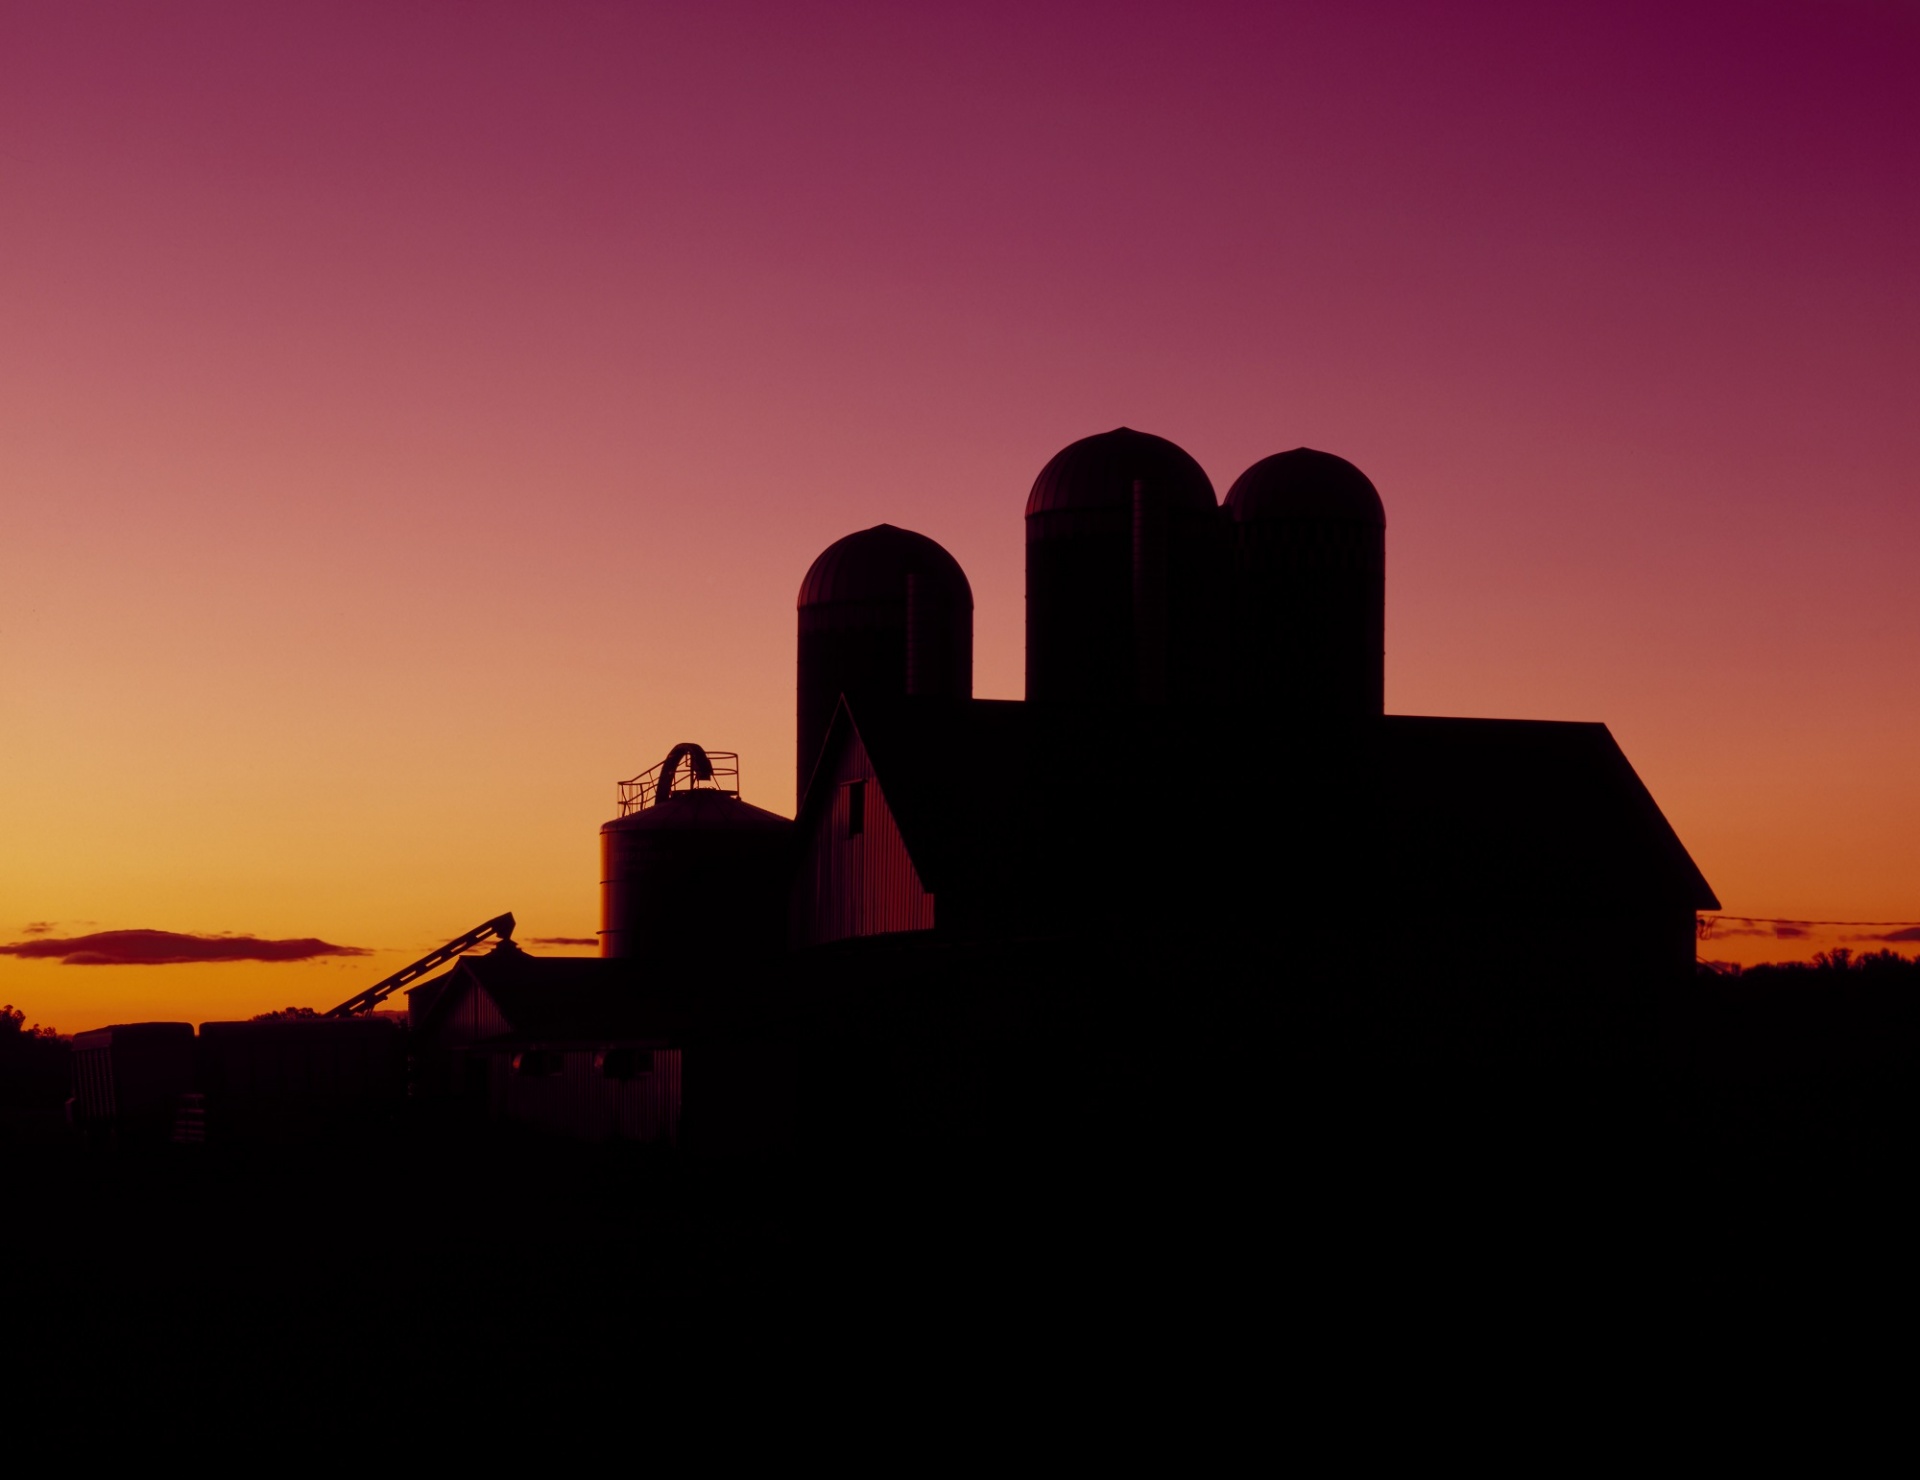 Dairy Barn At Sunset